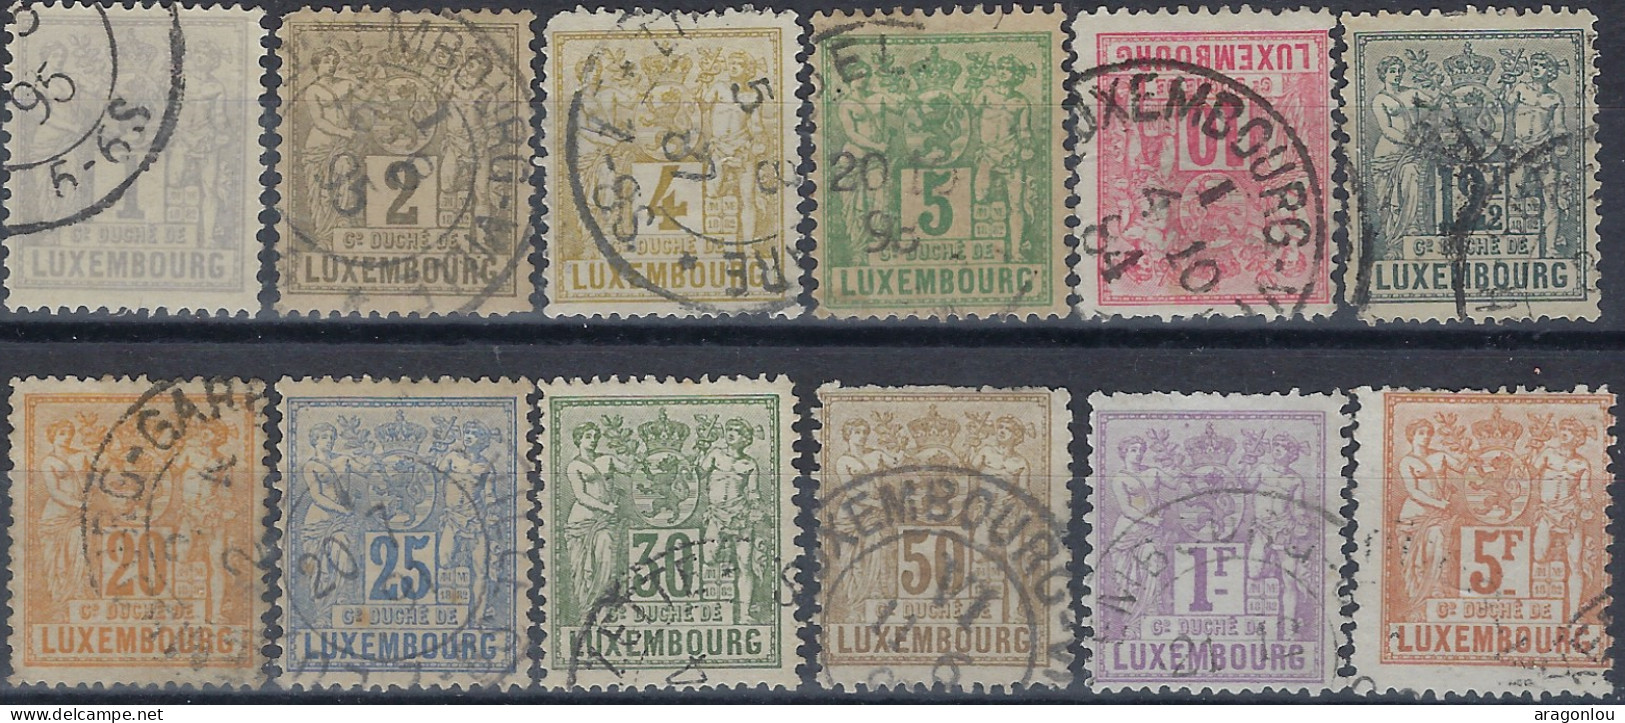 Luxembourg - Luxemburg - Timbres  1882   Allégorie   °   Satz   VC.  300,- - 1882 Allegorie